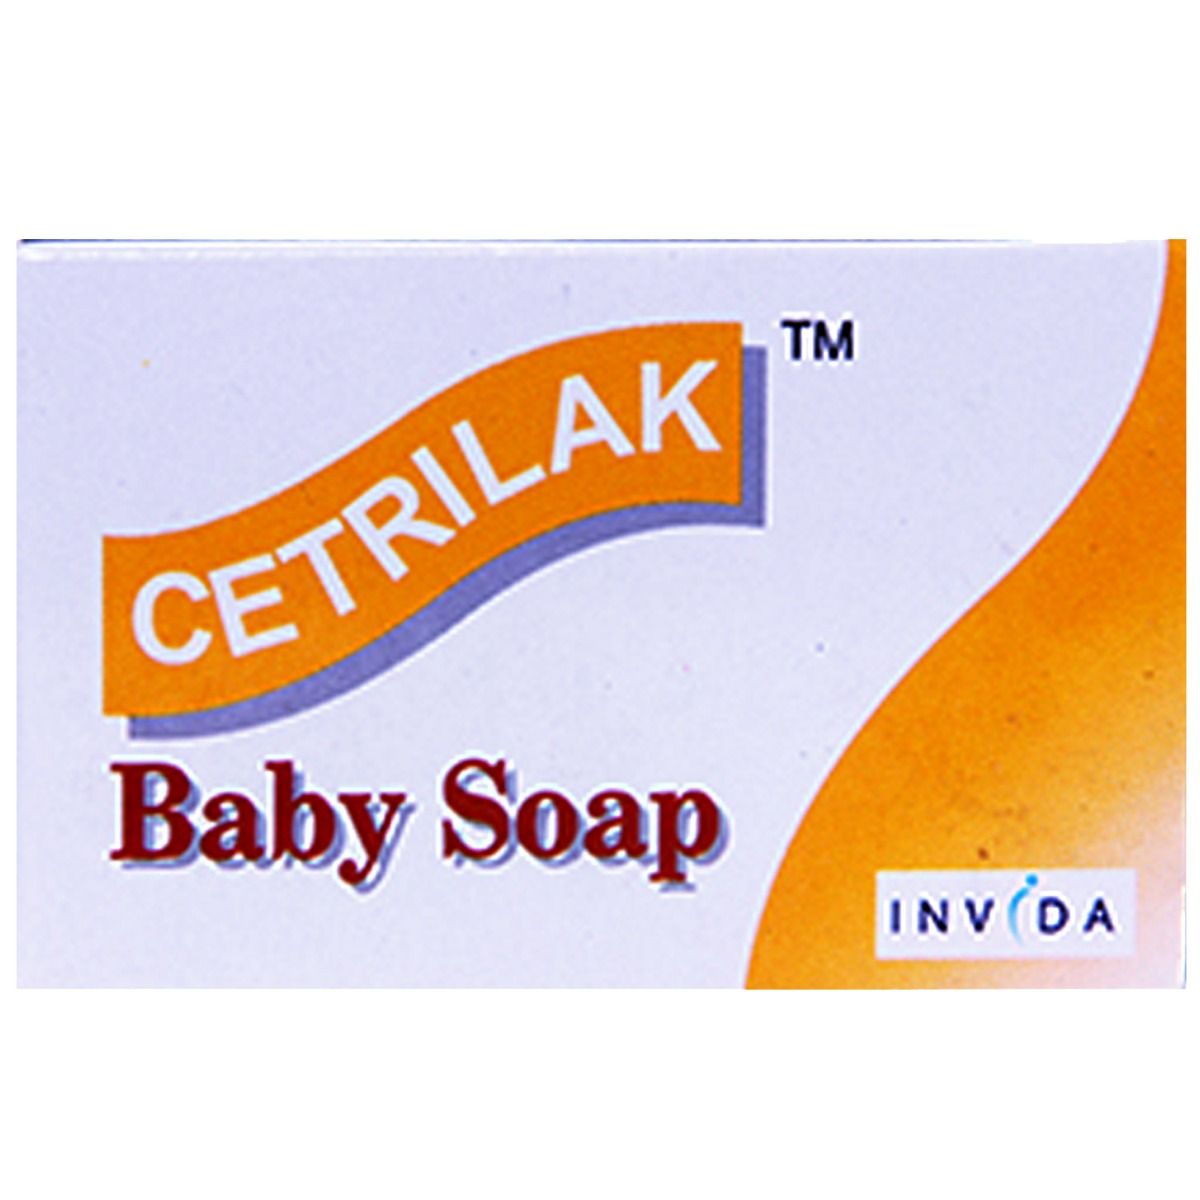 Buy Cetrilak Baby Soap, 75 gm Online